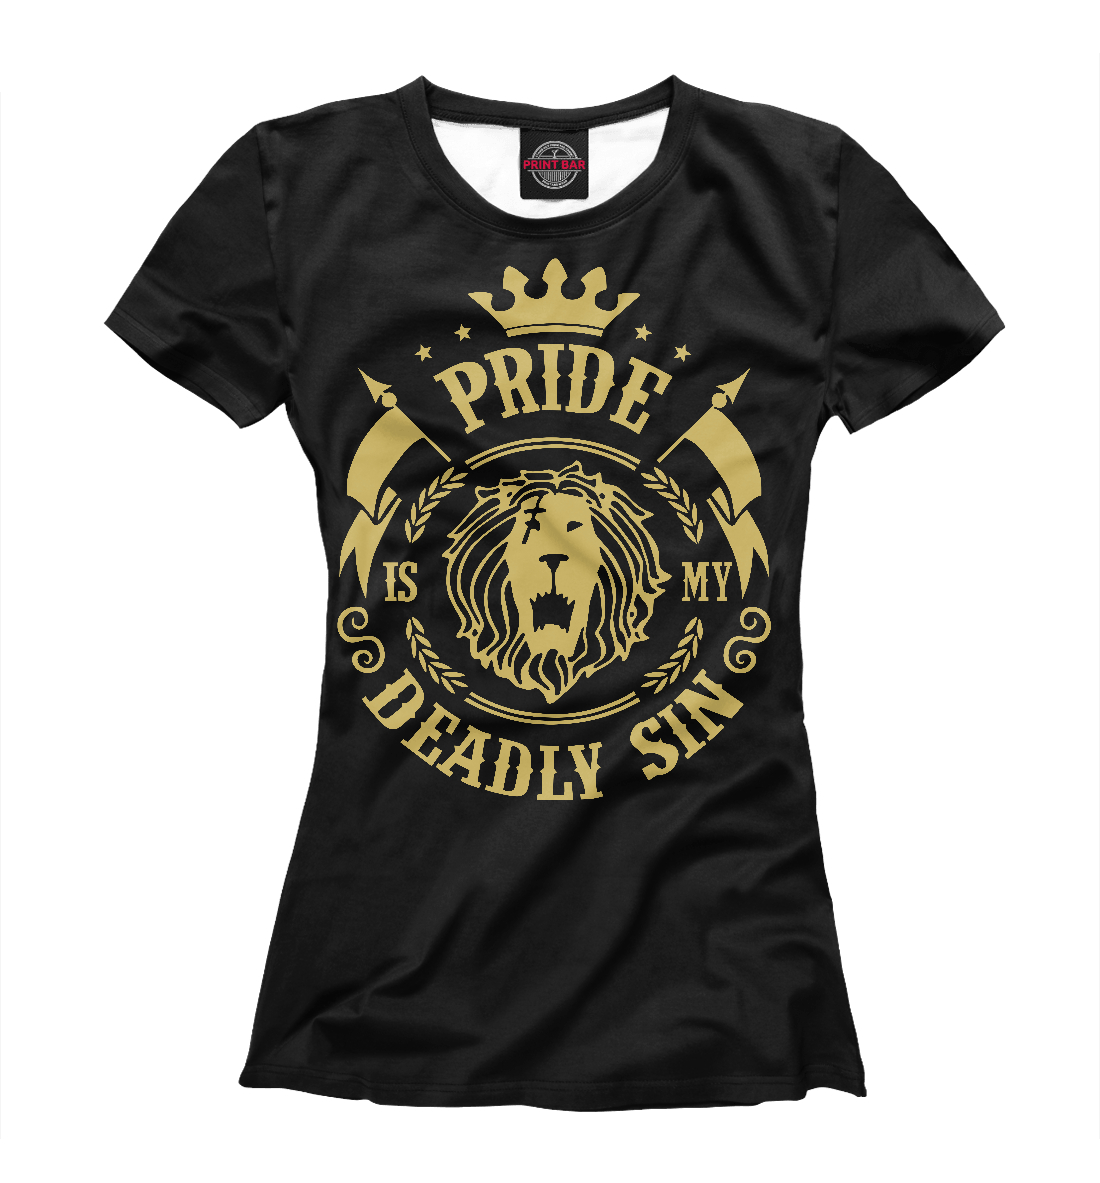 Женская Футболка с принтом Pride is my sin, артикул ANR-478445-fut-1mp